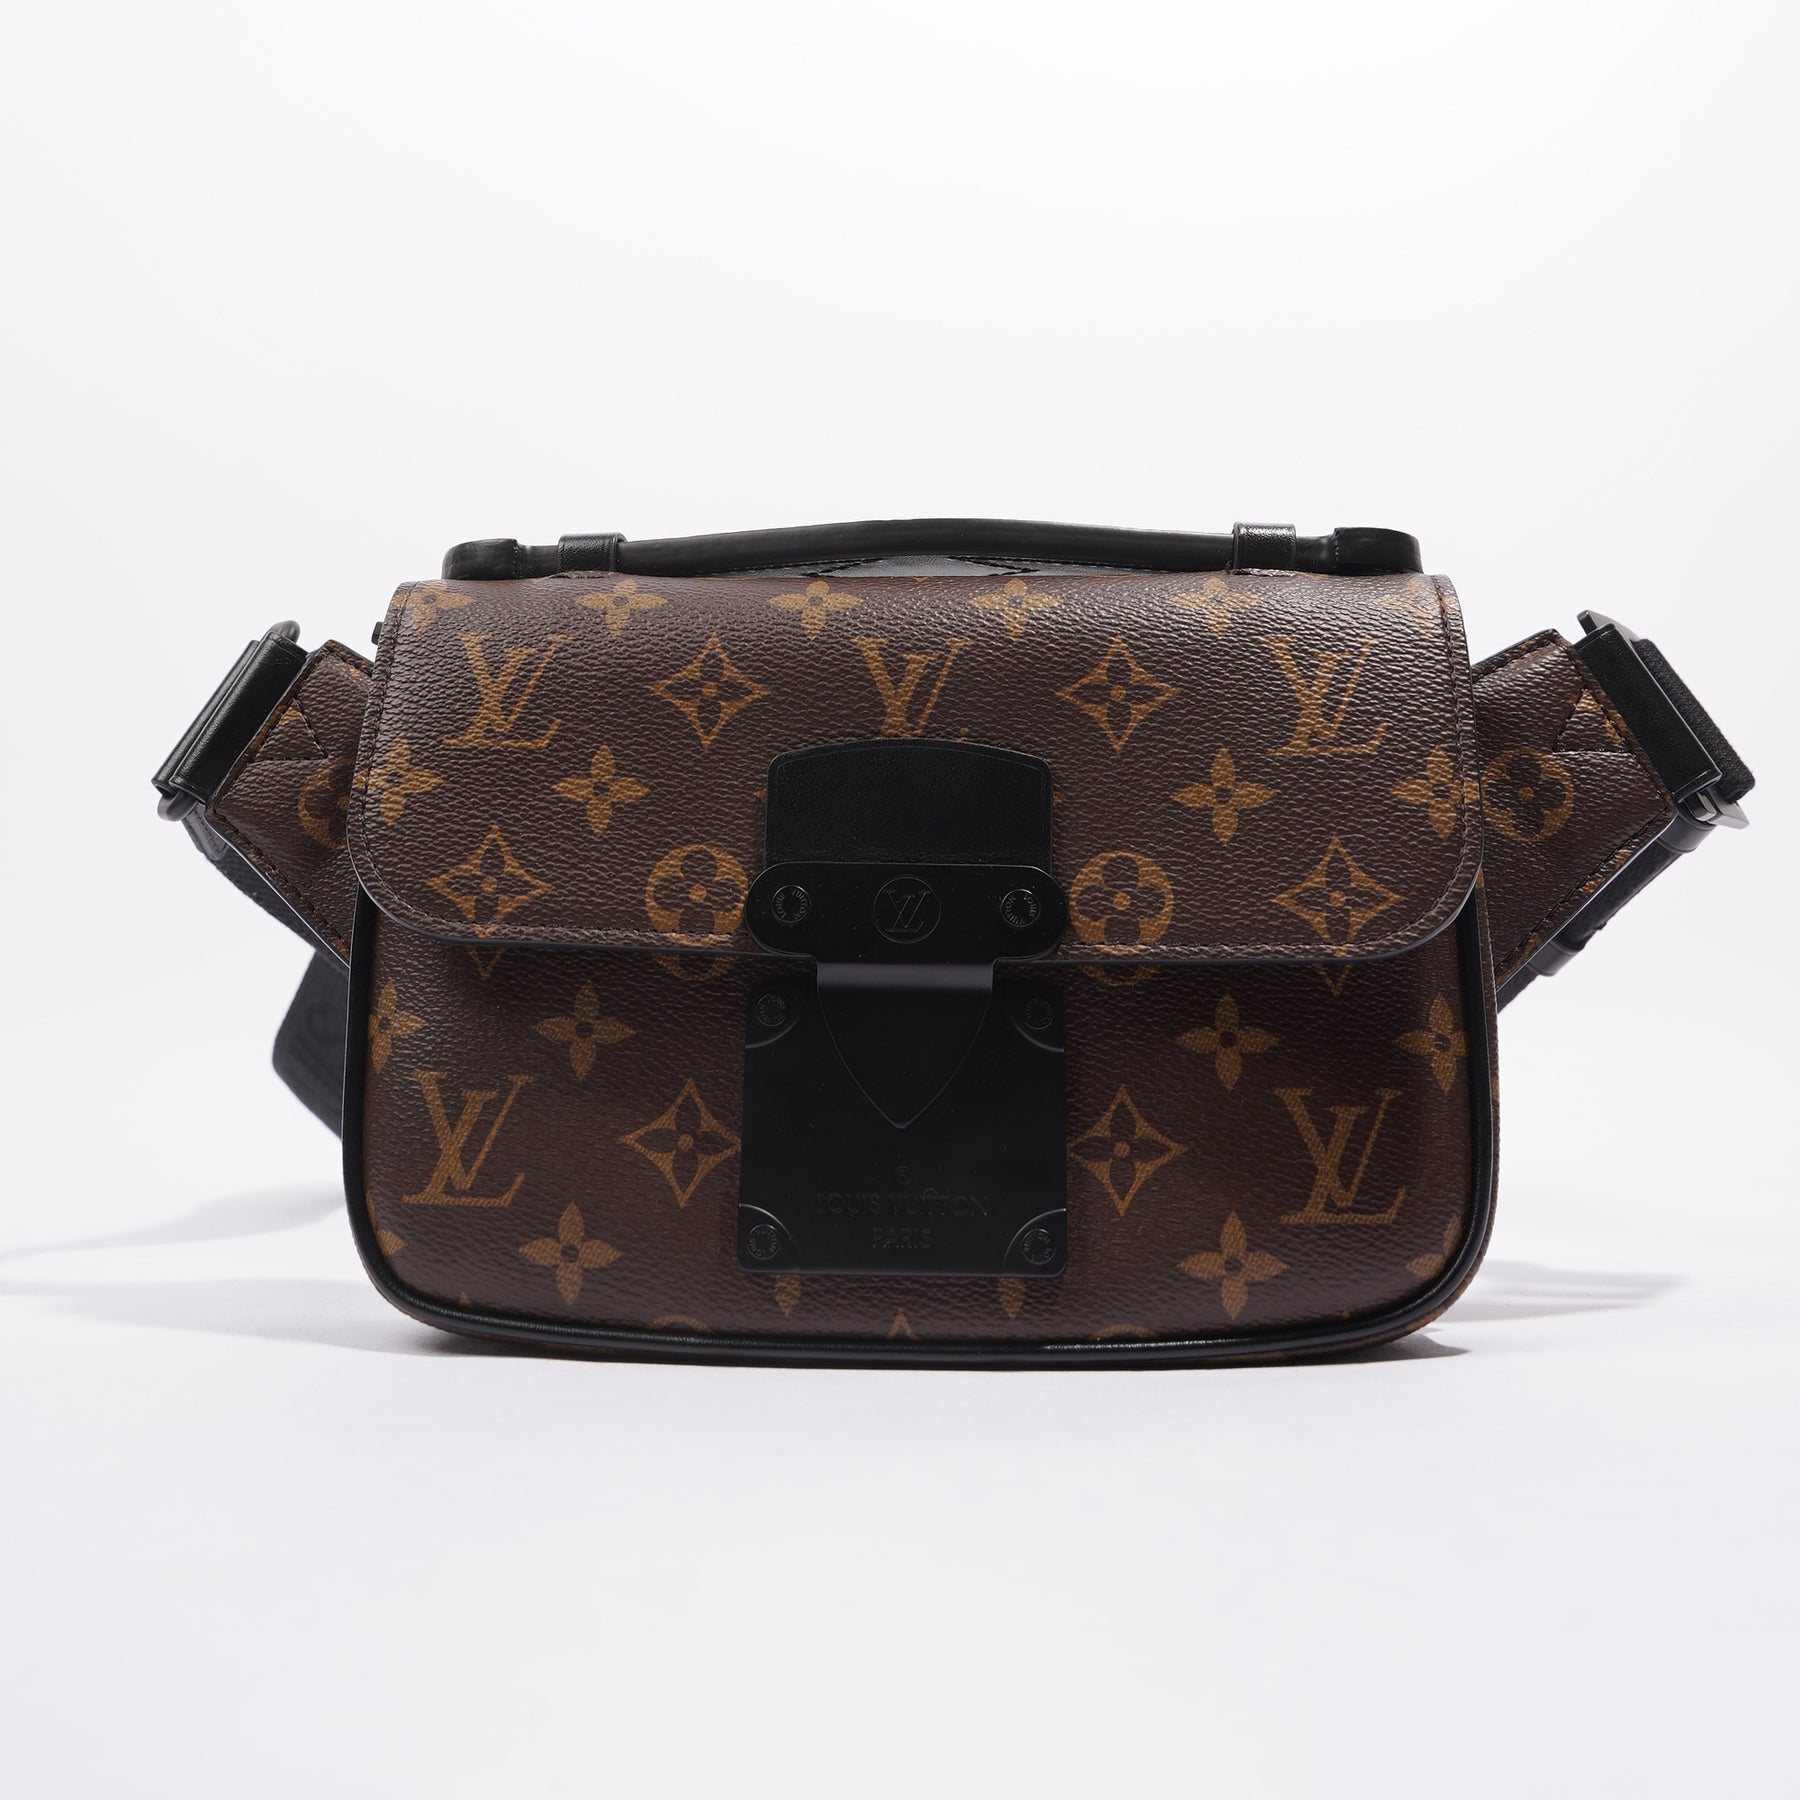 Louis Vuitton Marc Jacobs LV Monogram Lock Evening Bag